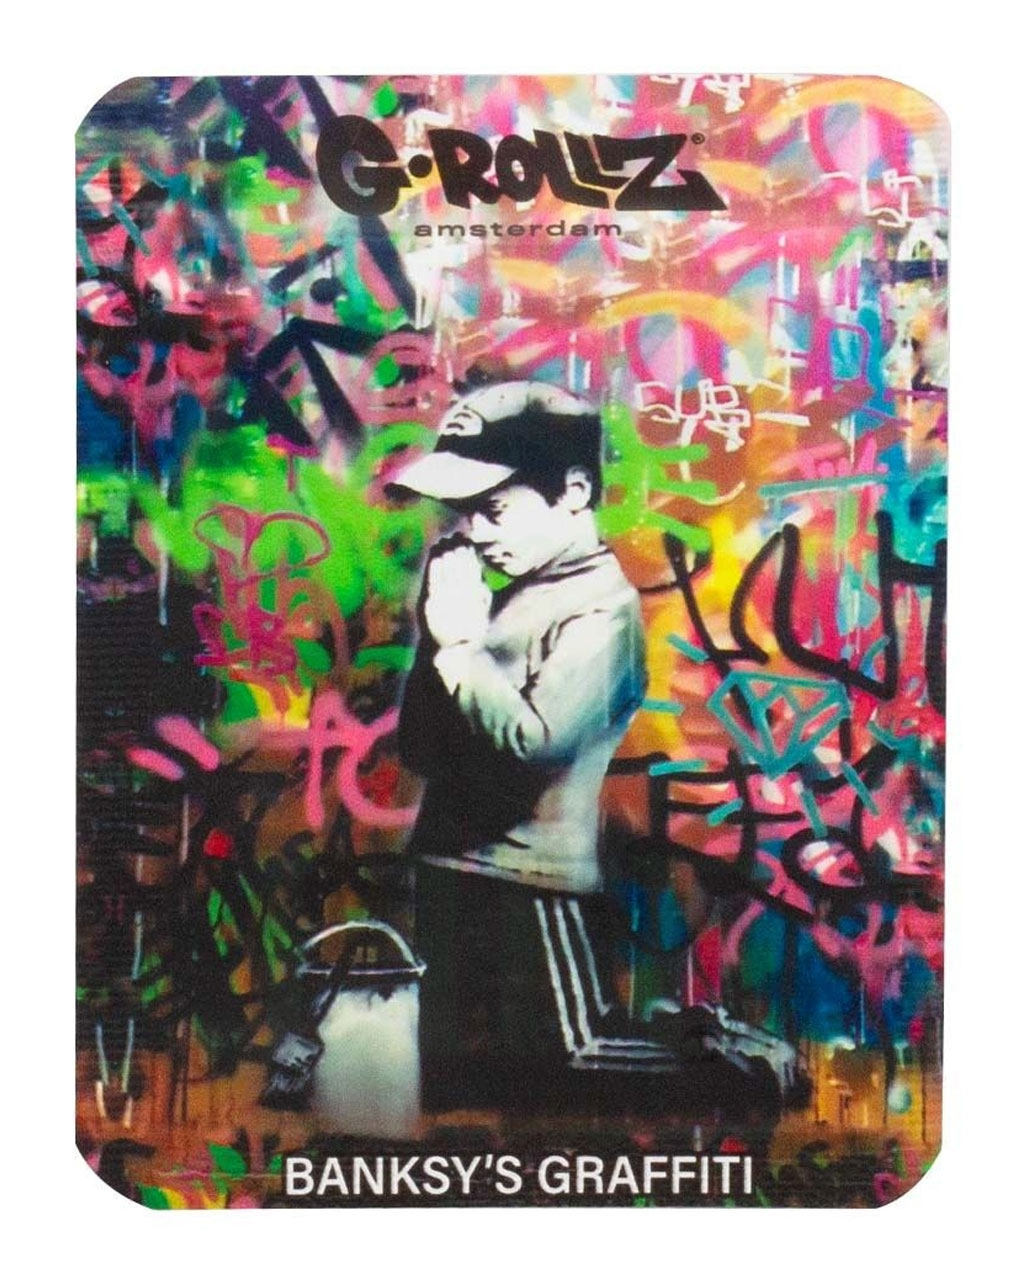 Aufbewahrung G-ROLLZ Baggie ‘Banksy’ | 65×85